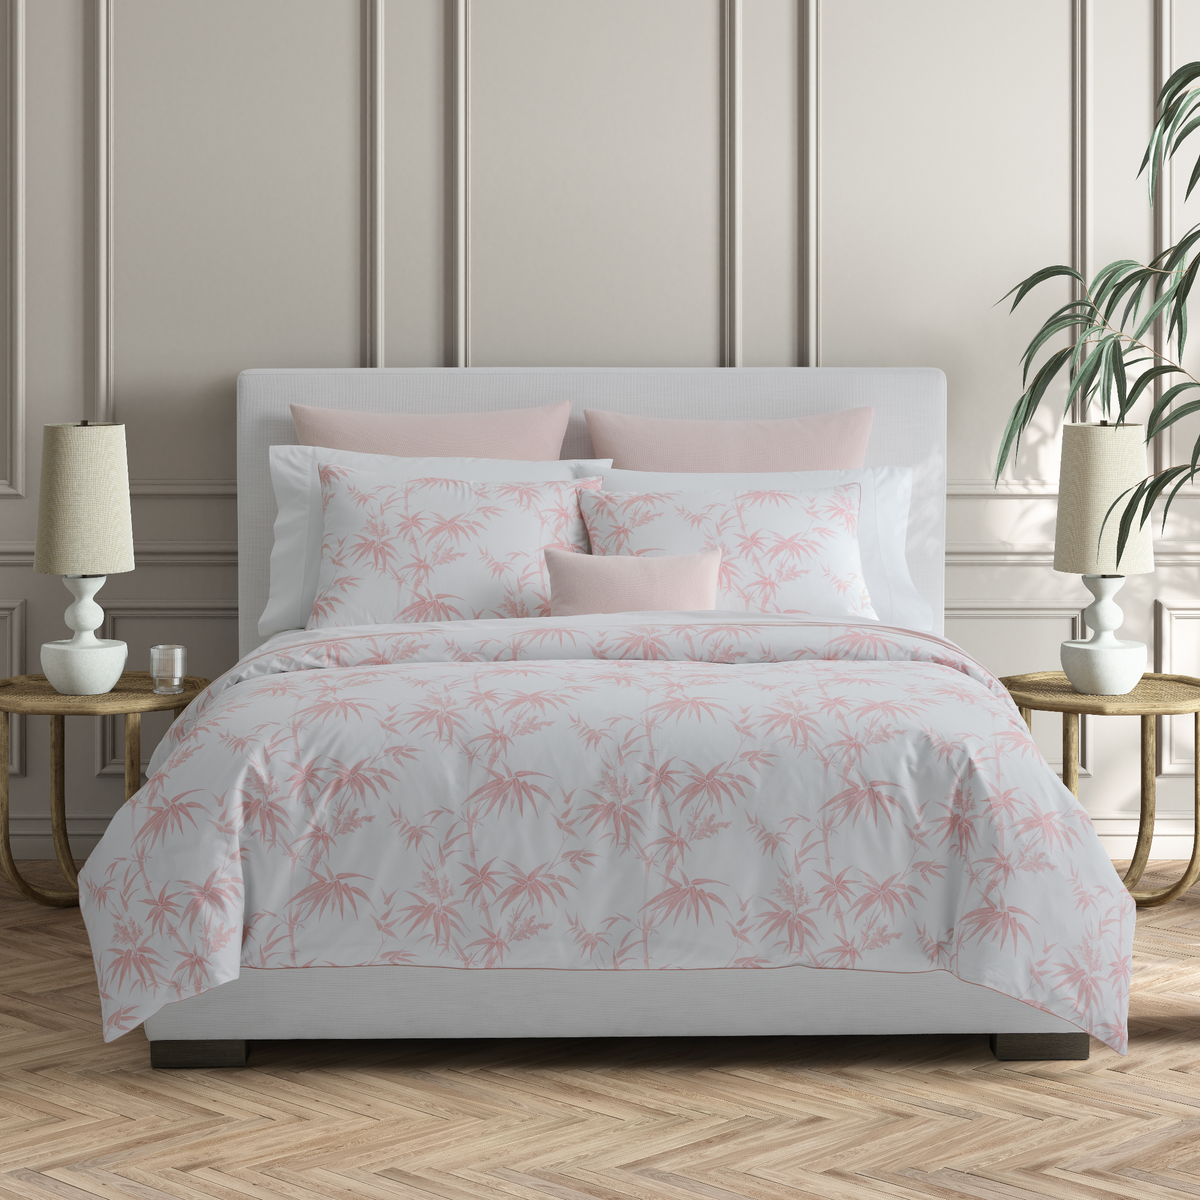 Full Bed in Matouk Schumacher Dominique Bedding in Blush Color